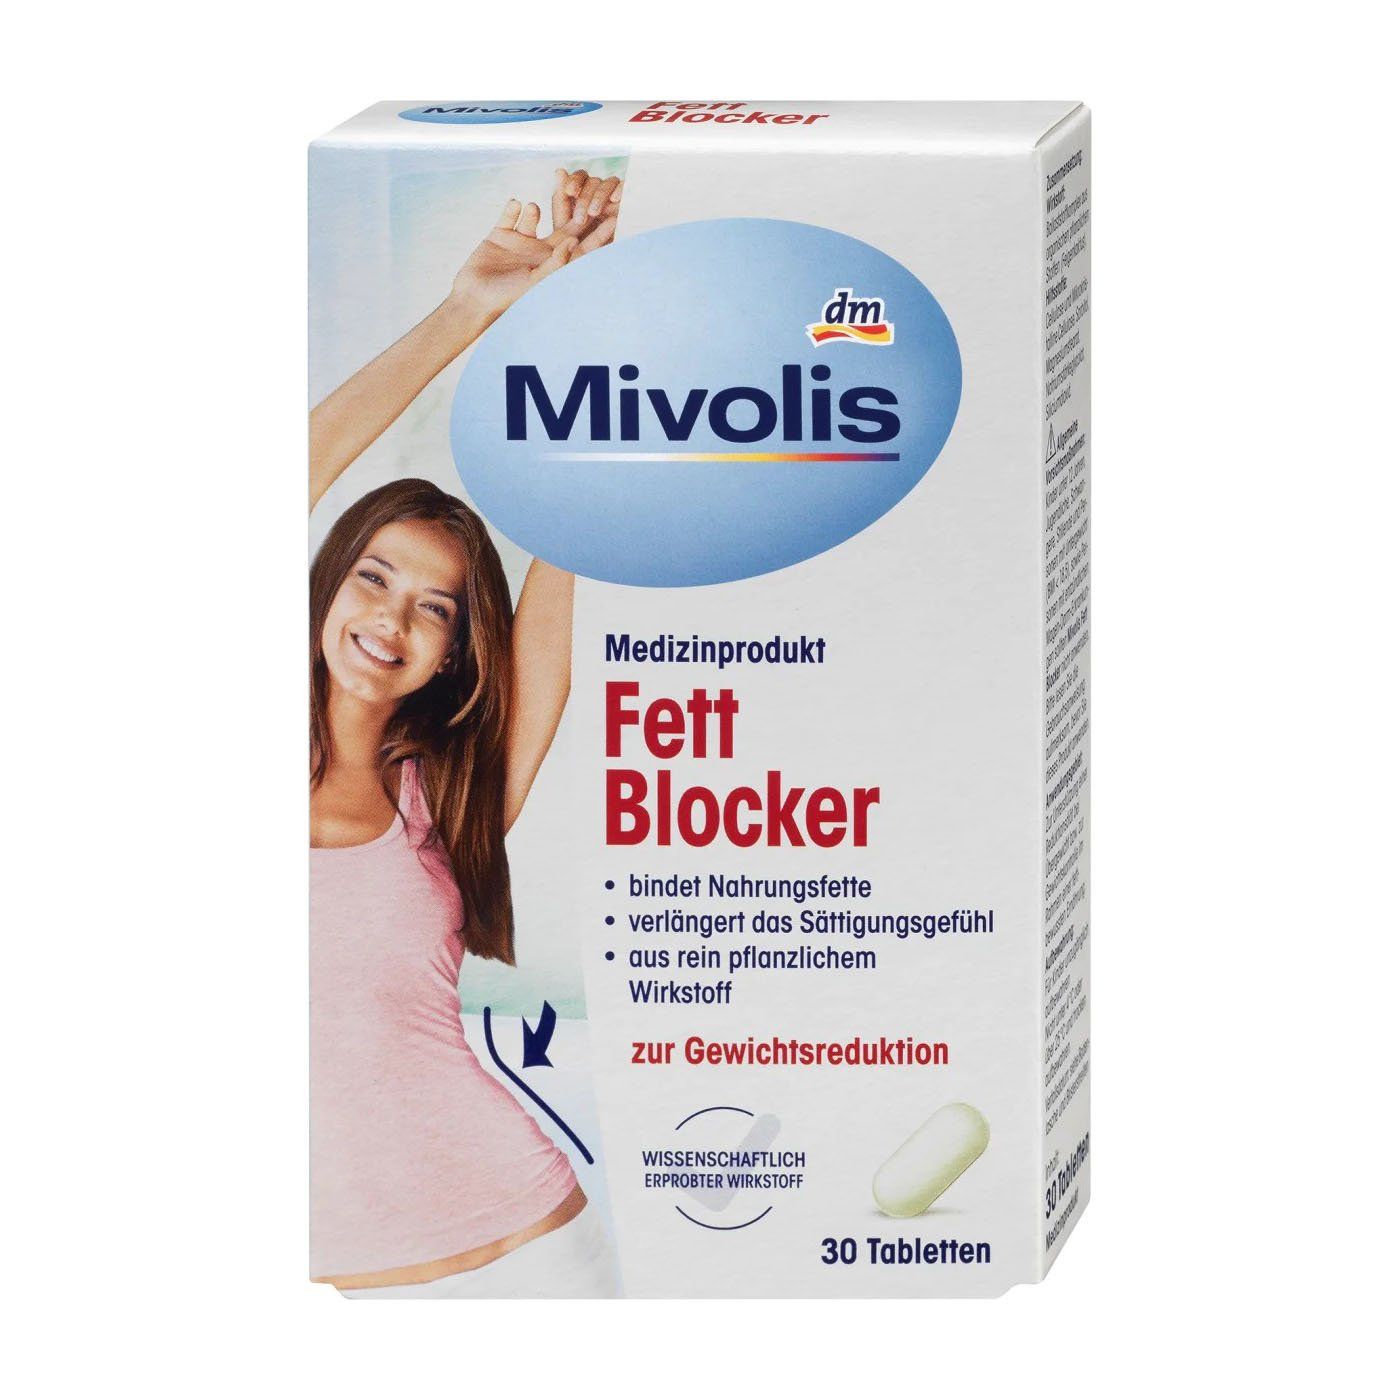  Viên uống giảm cân Mivolis Fett Blocker, hộp 30 viên 